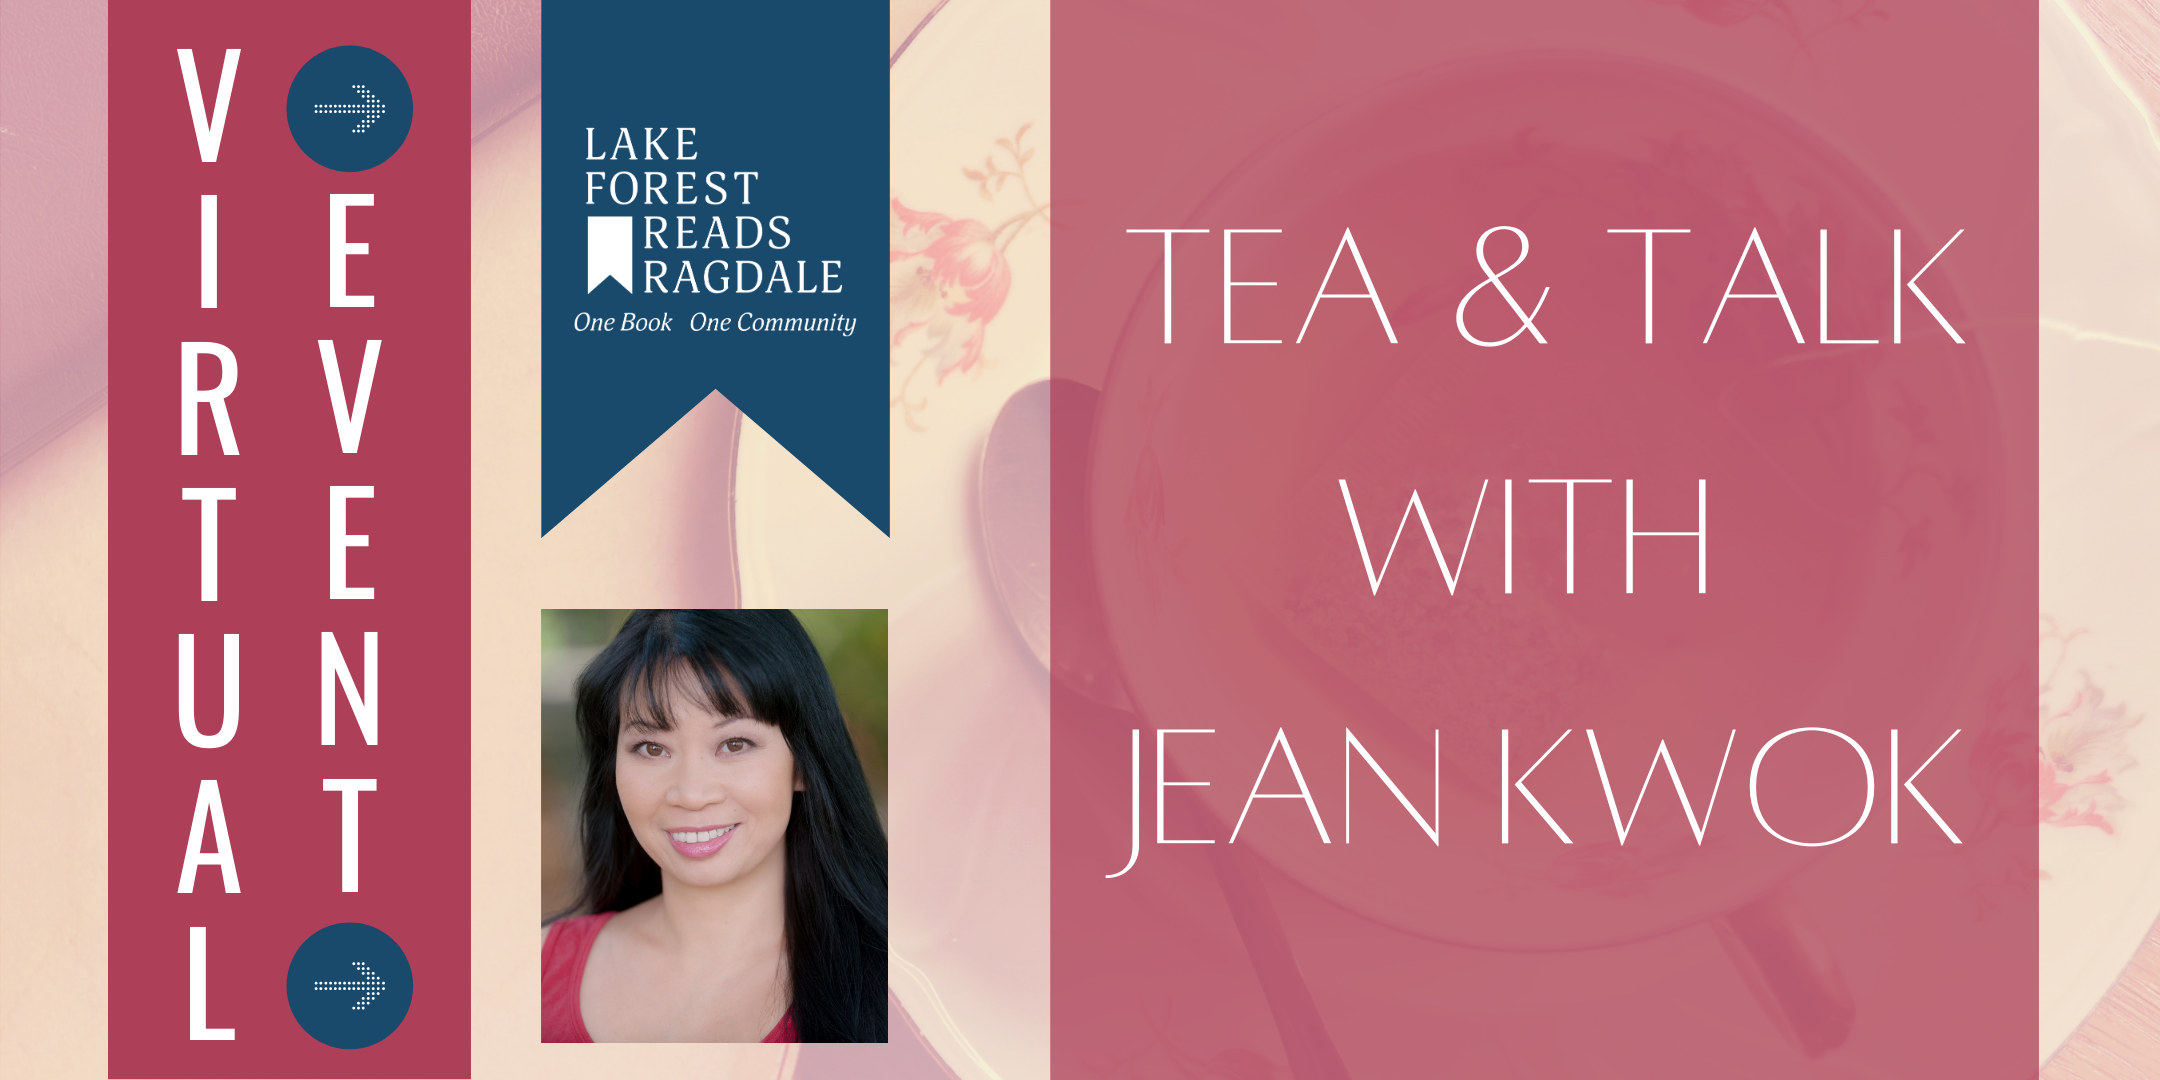 Tea & Talk with Jean Kwok event image